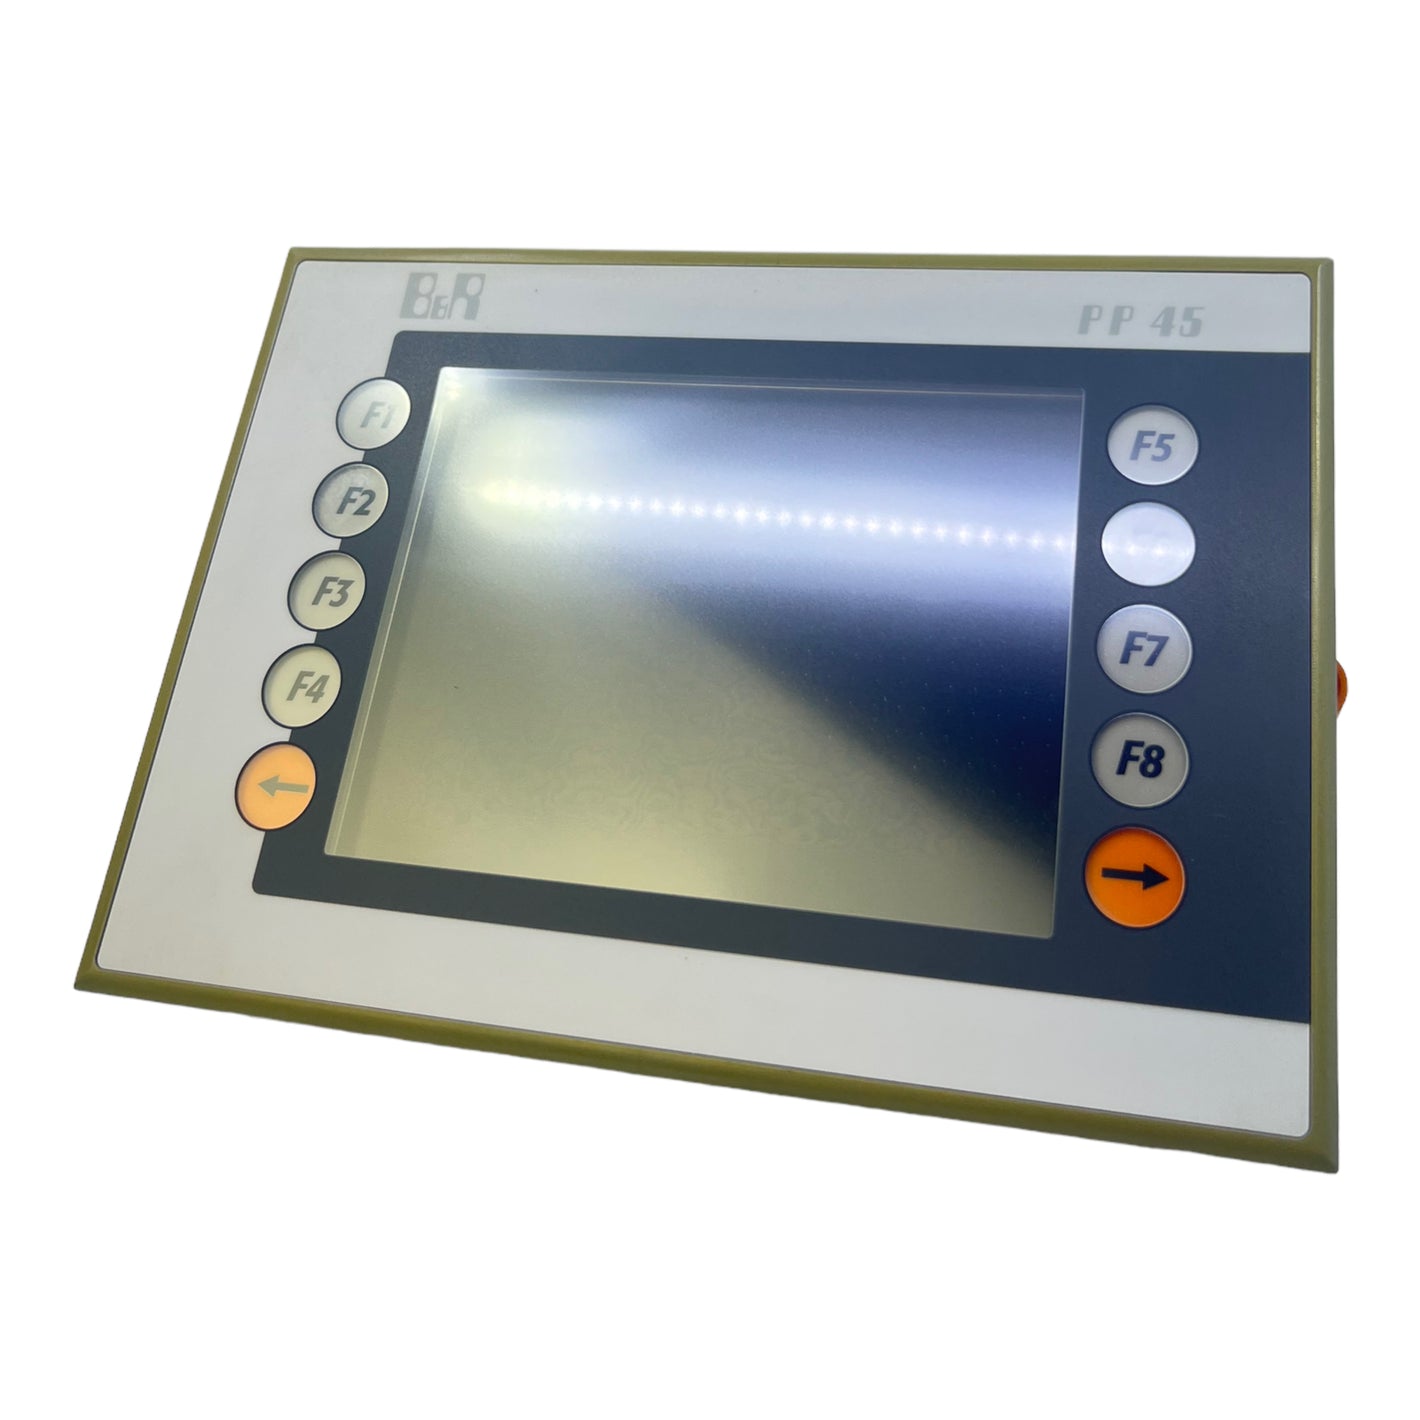 B&amp;R 4PP045.0571-062 touchscreen panel 24VDC IP65 4-pin 0 to 50°C panel 